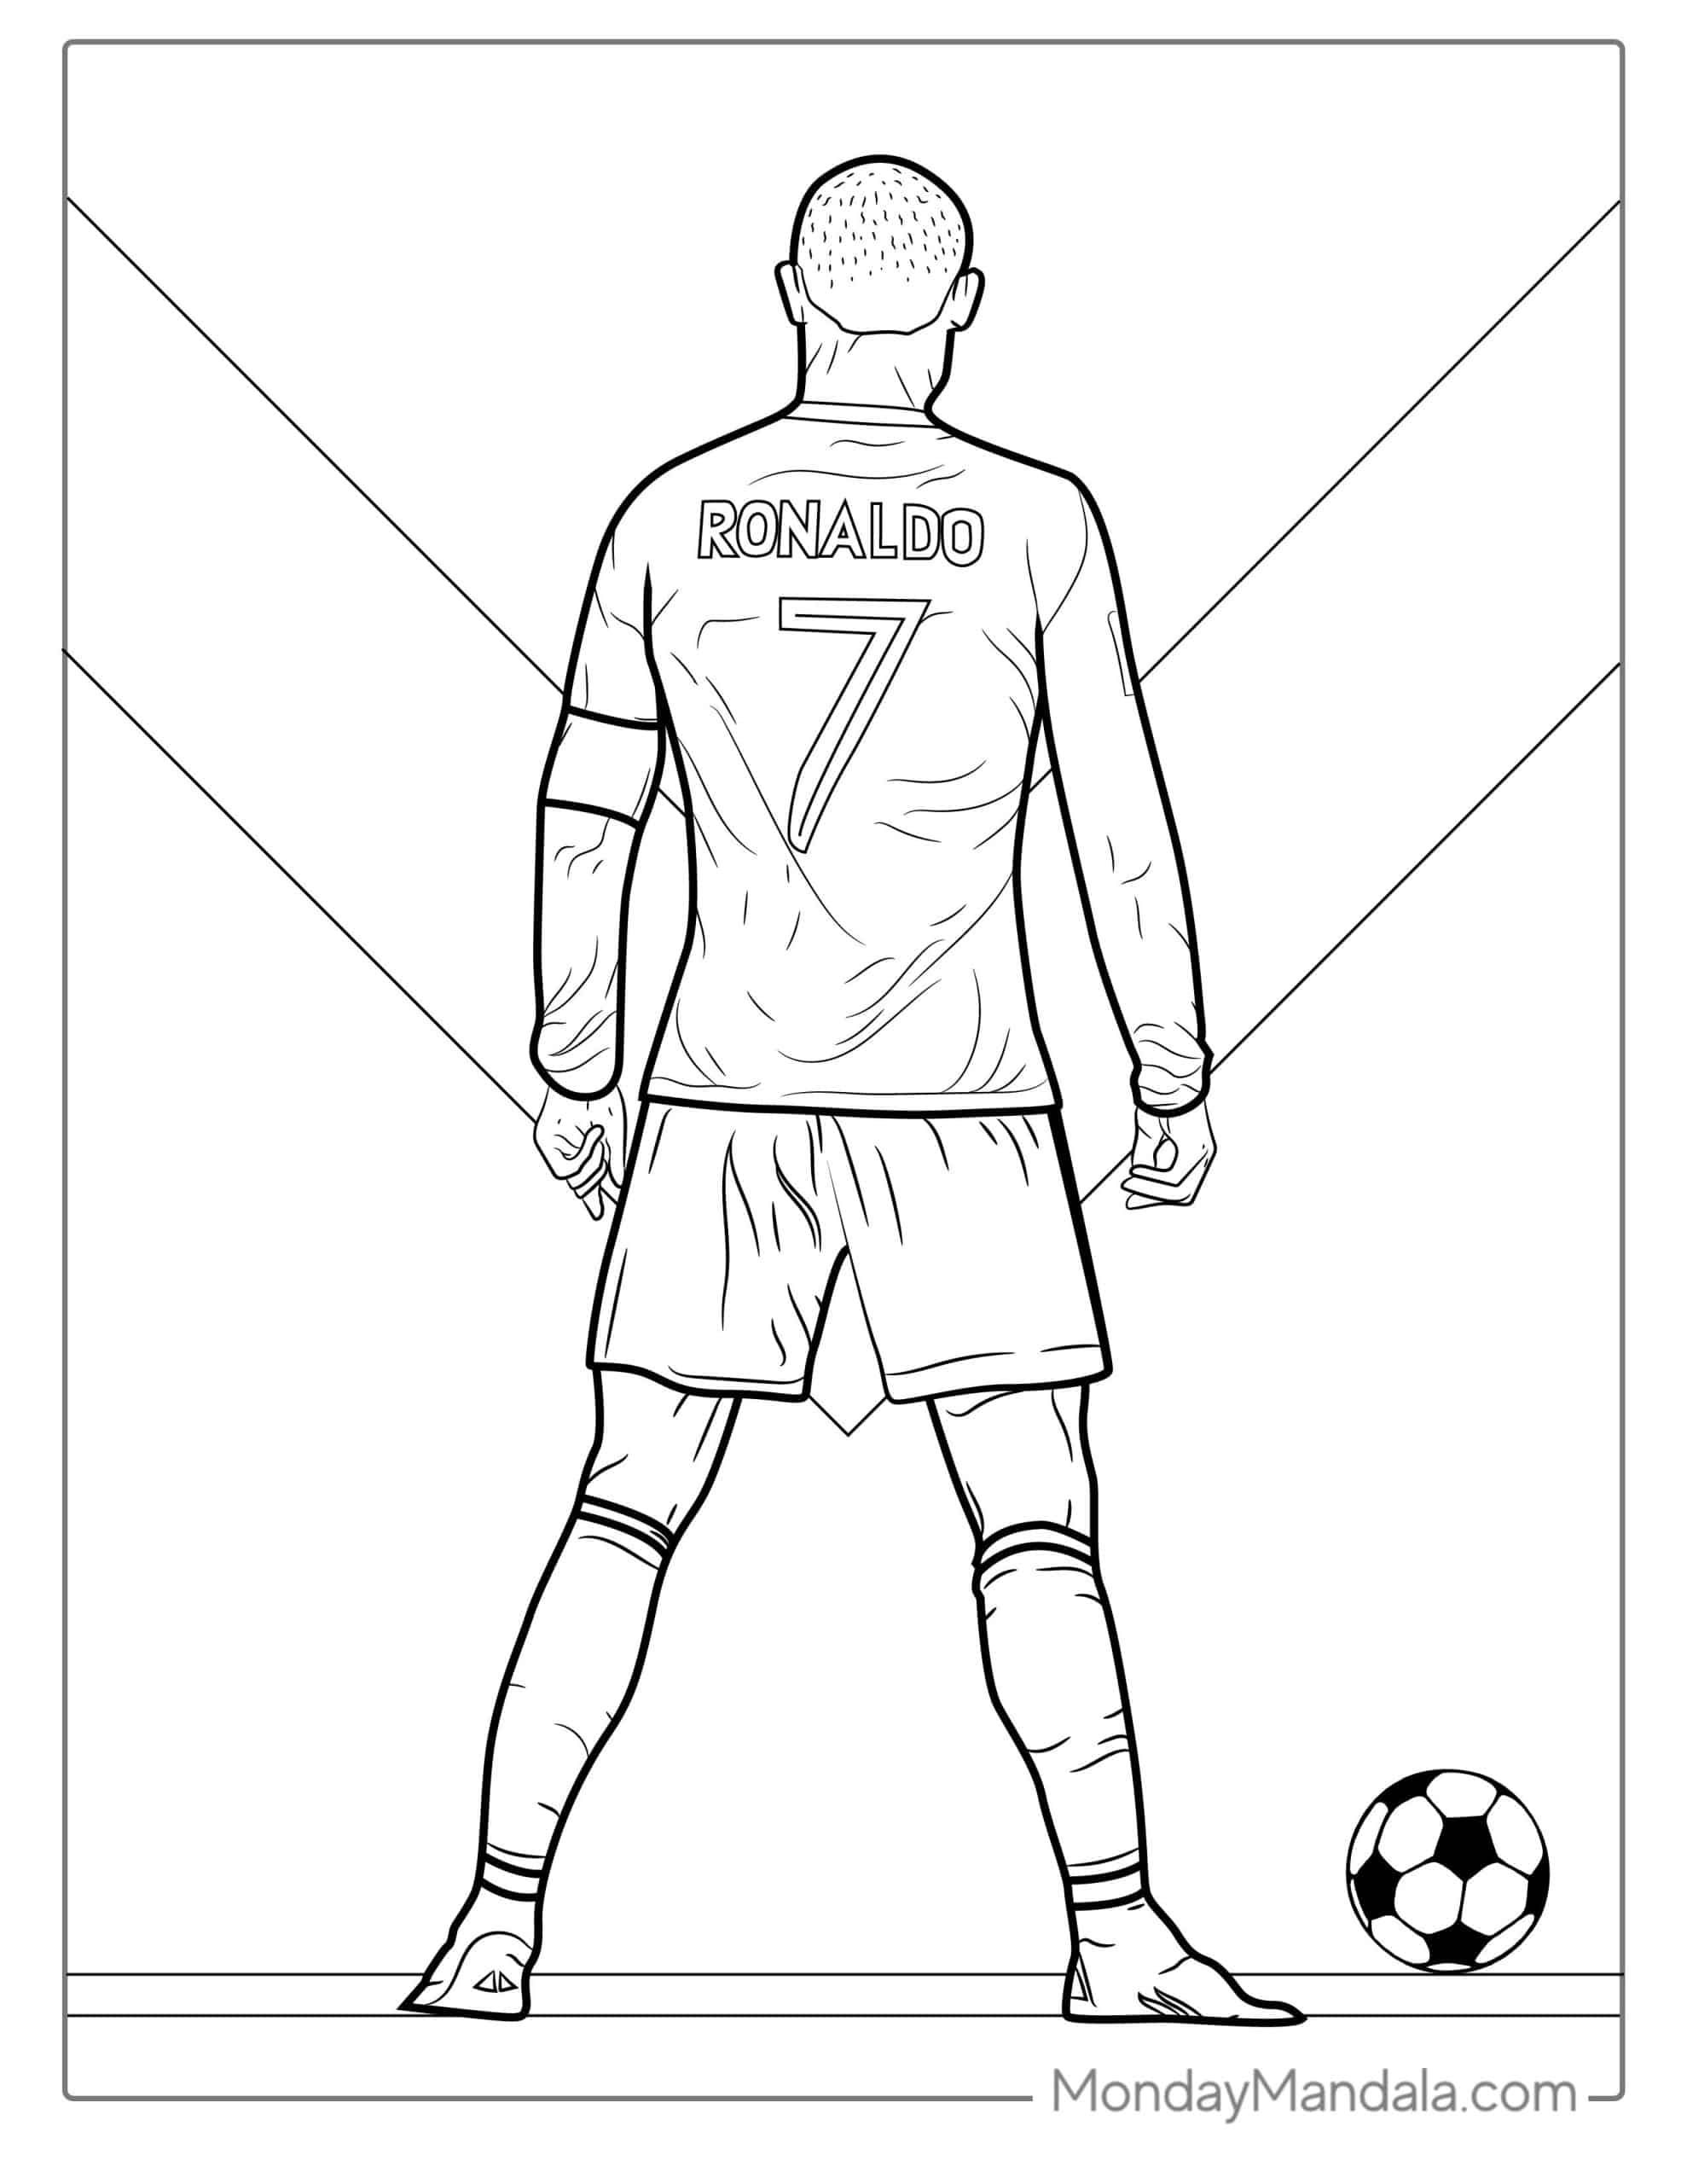 Ronaldo coloring pages free pdf printables ronaldo cristiano ronaldo football coloring pages